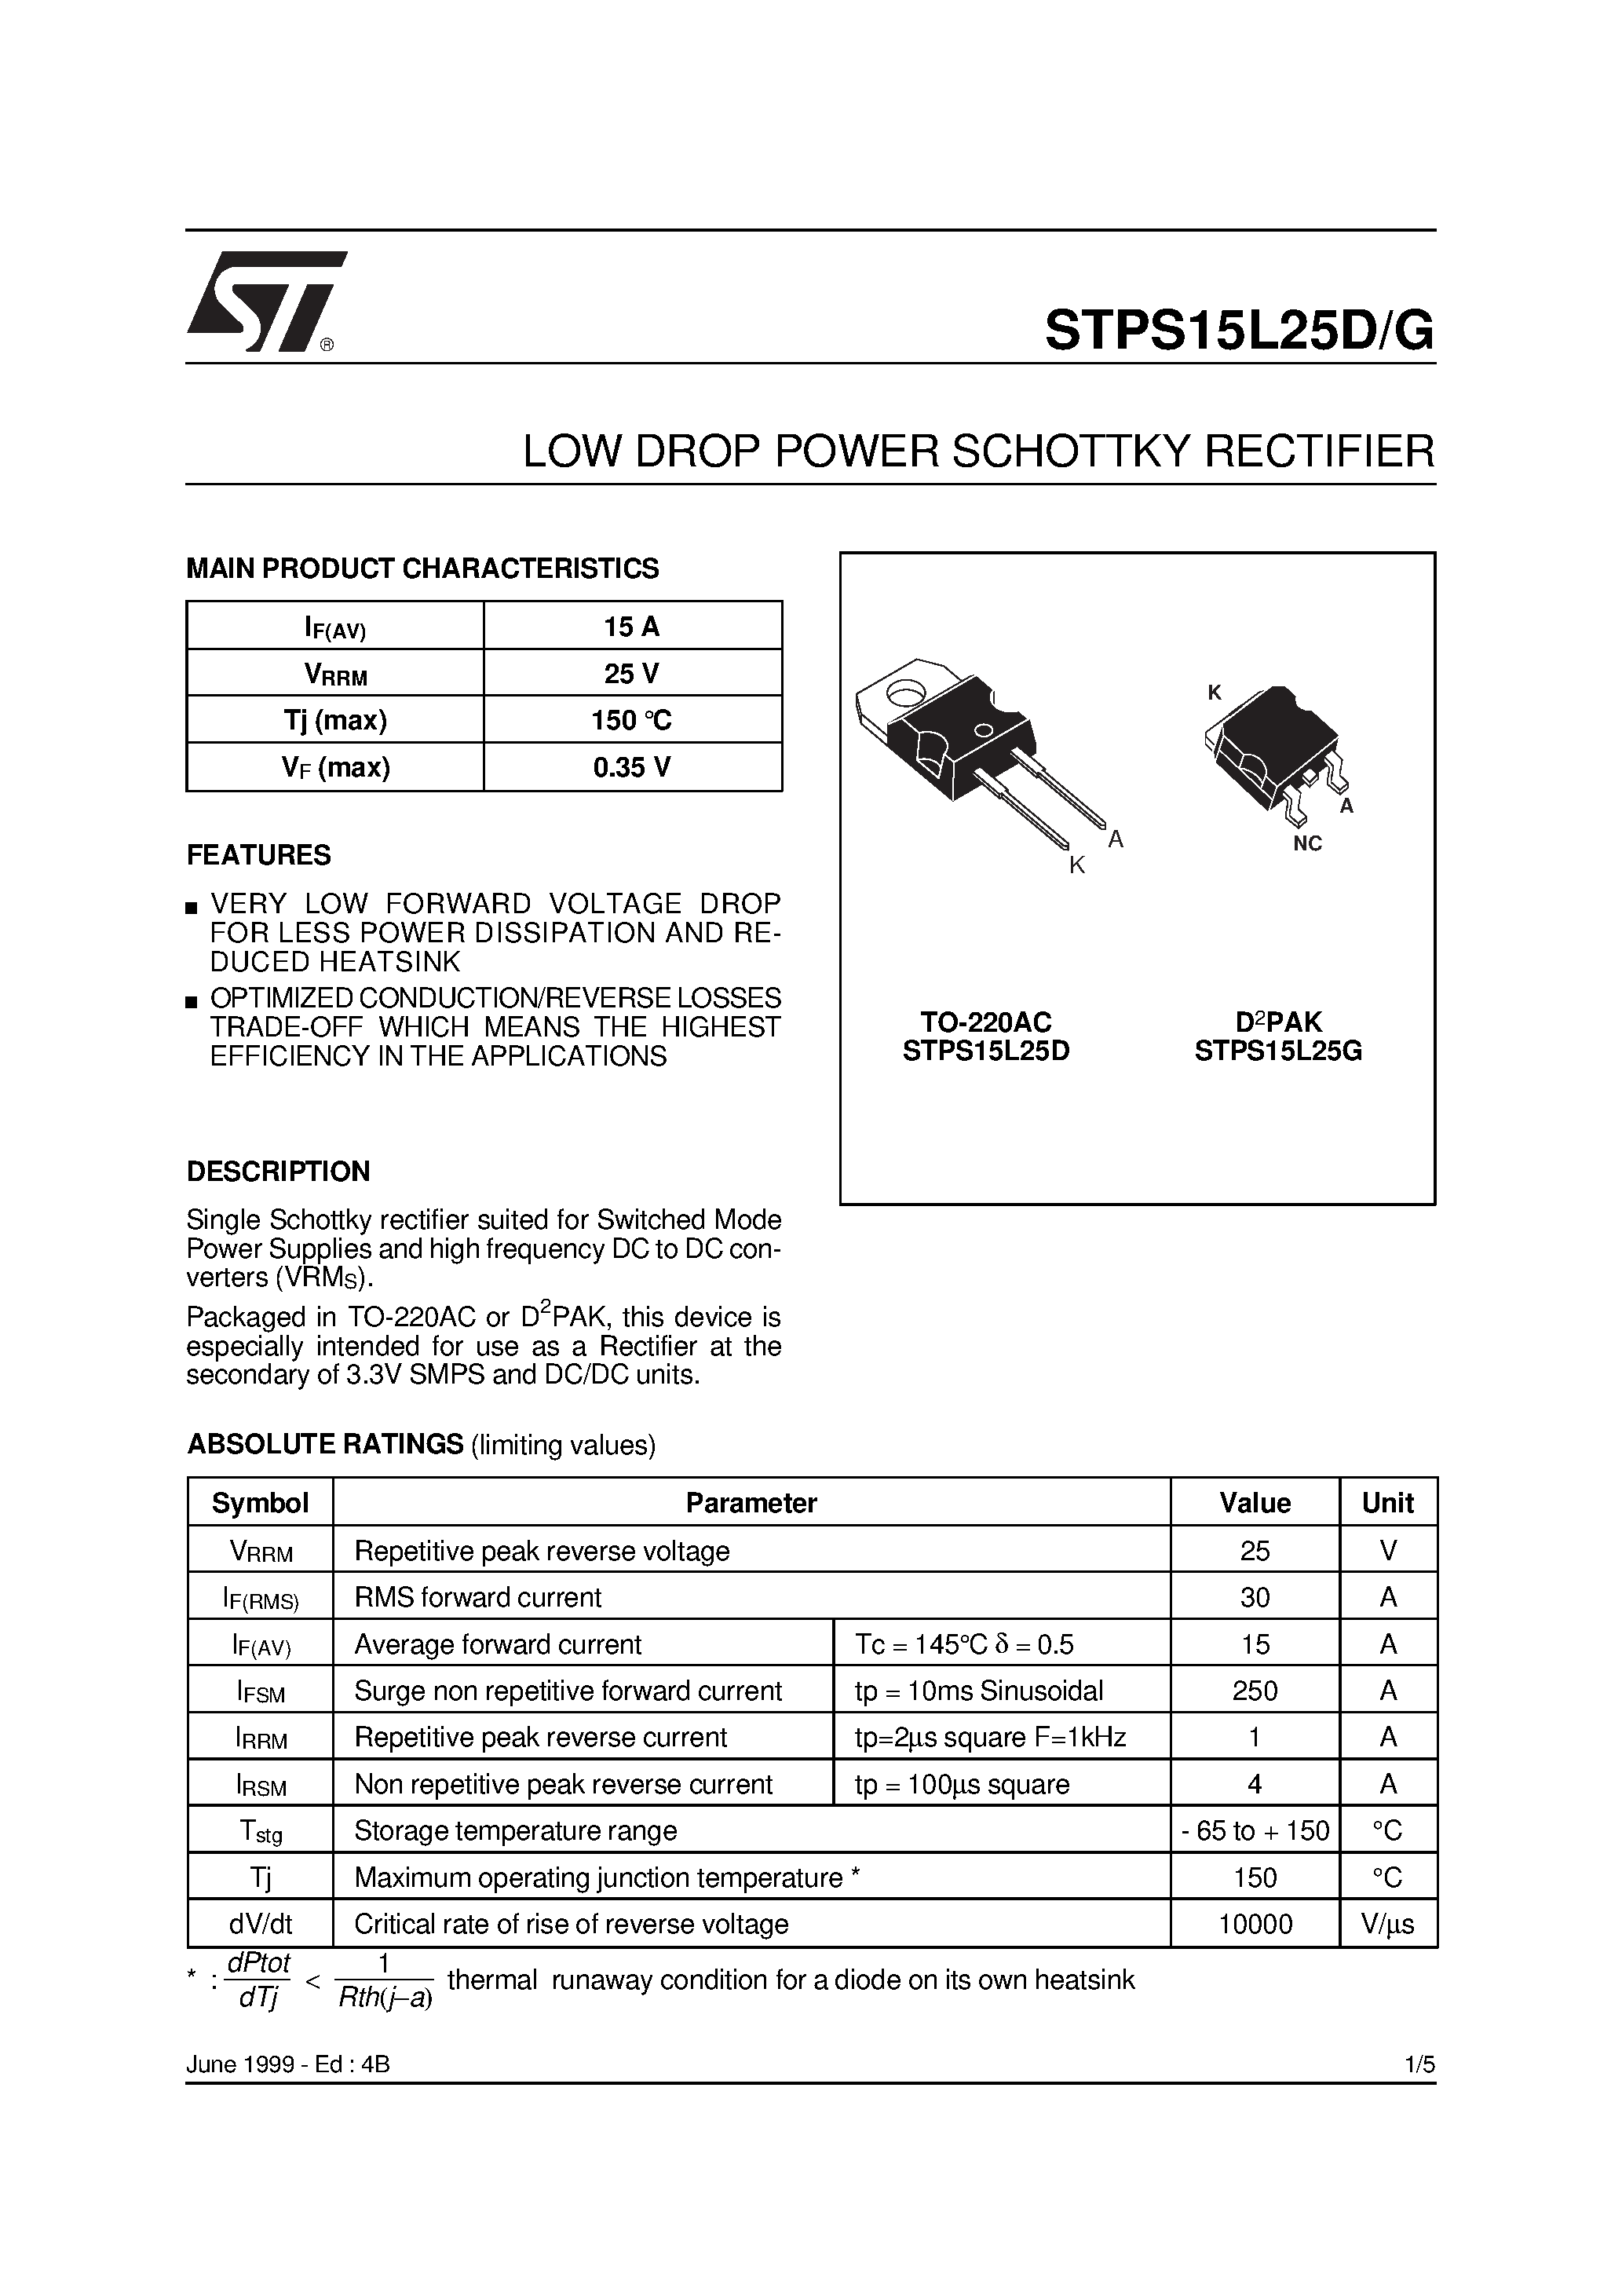 Datasheet STPS15L25D - (STPS15L25D / STPS15L25G) LOW DROP POWER SCHOTTKY RECTIFIER page 1